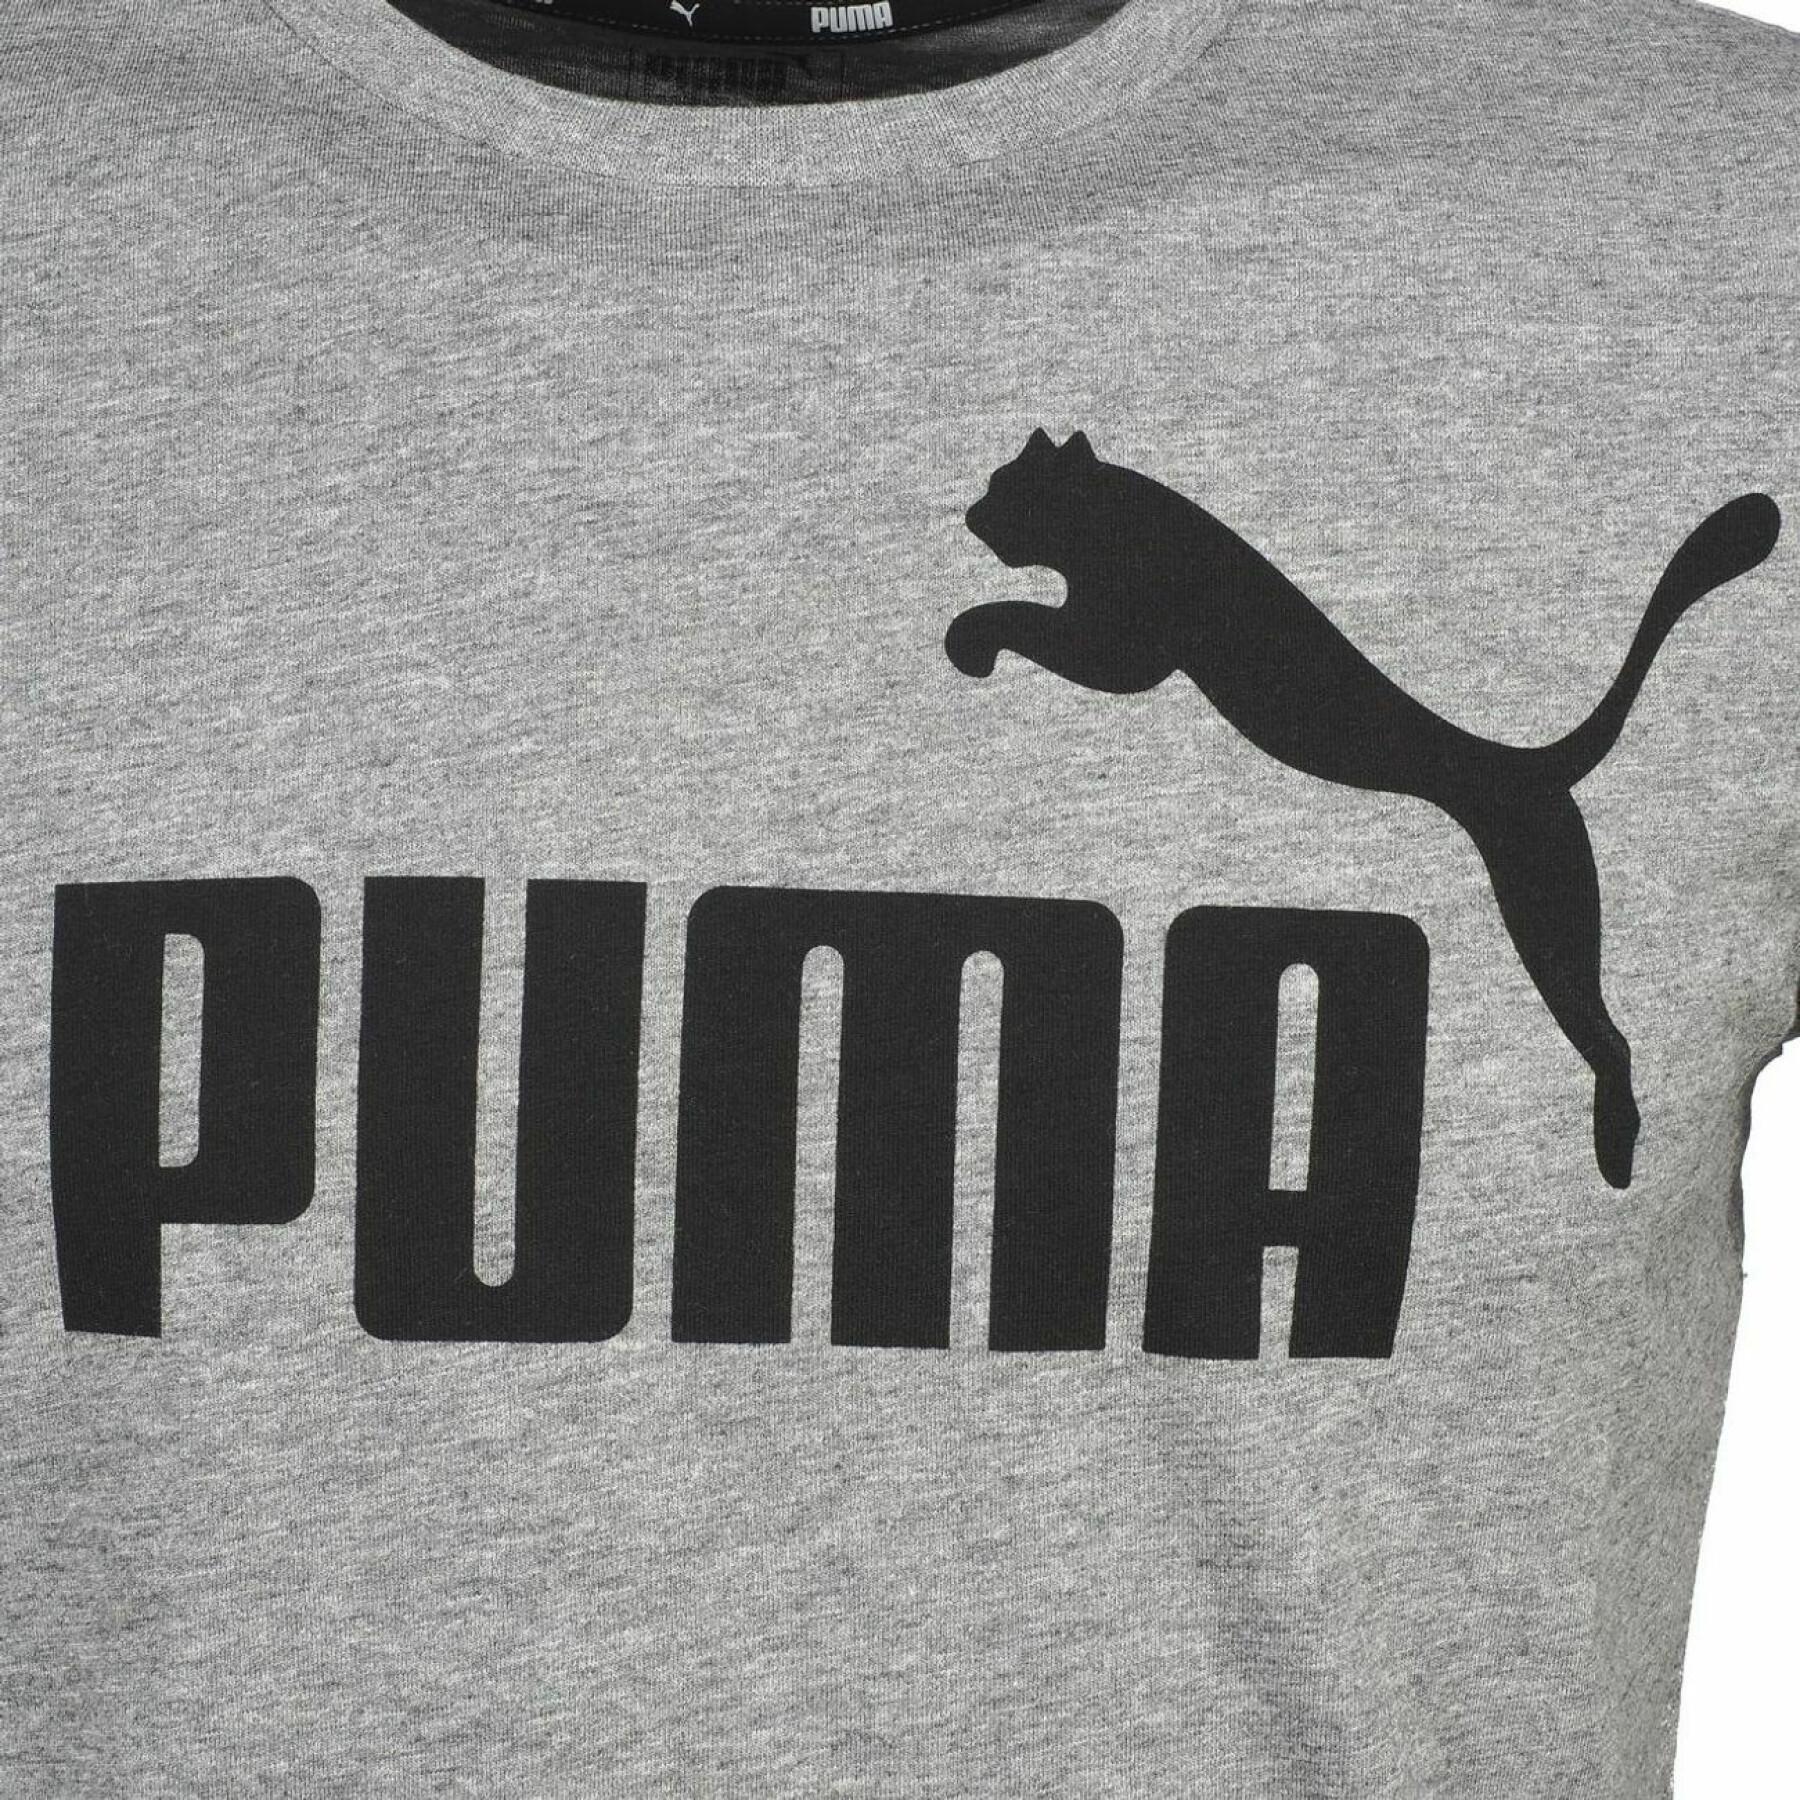 Koszulka dziecięca Puma Perma Essential